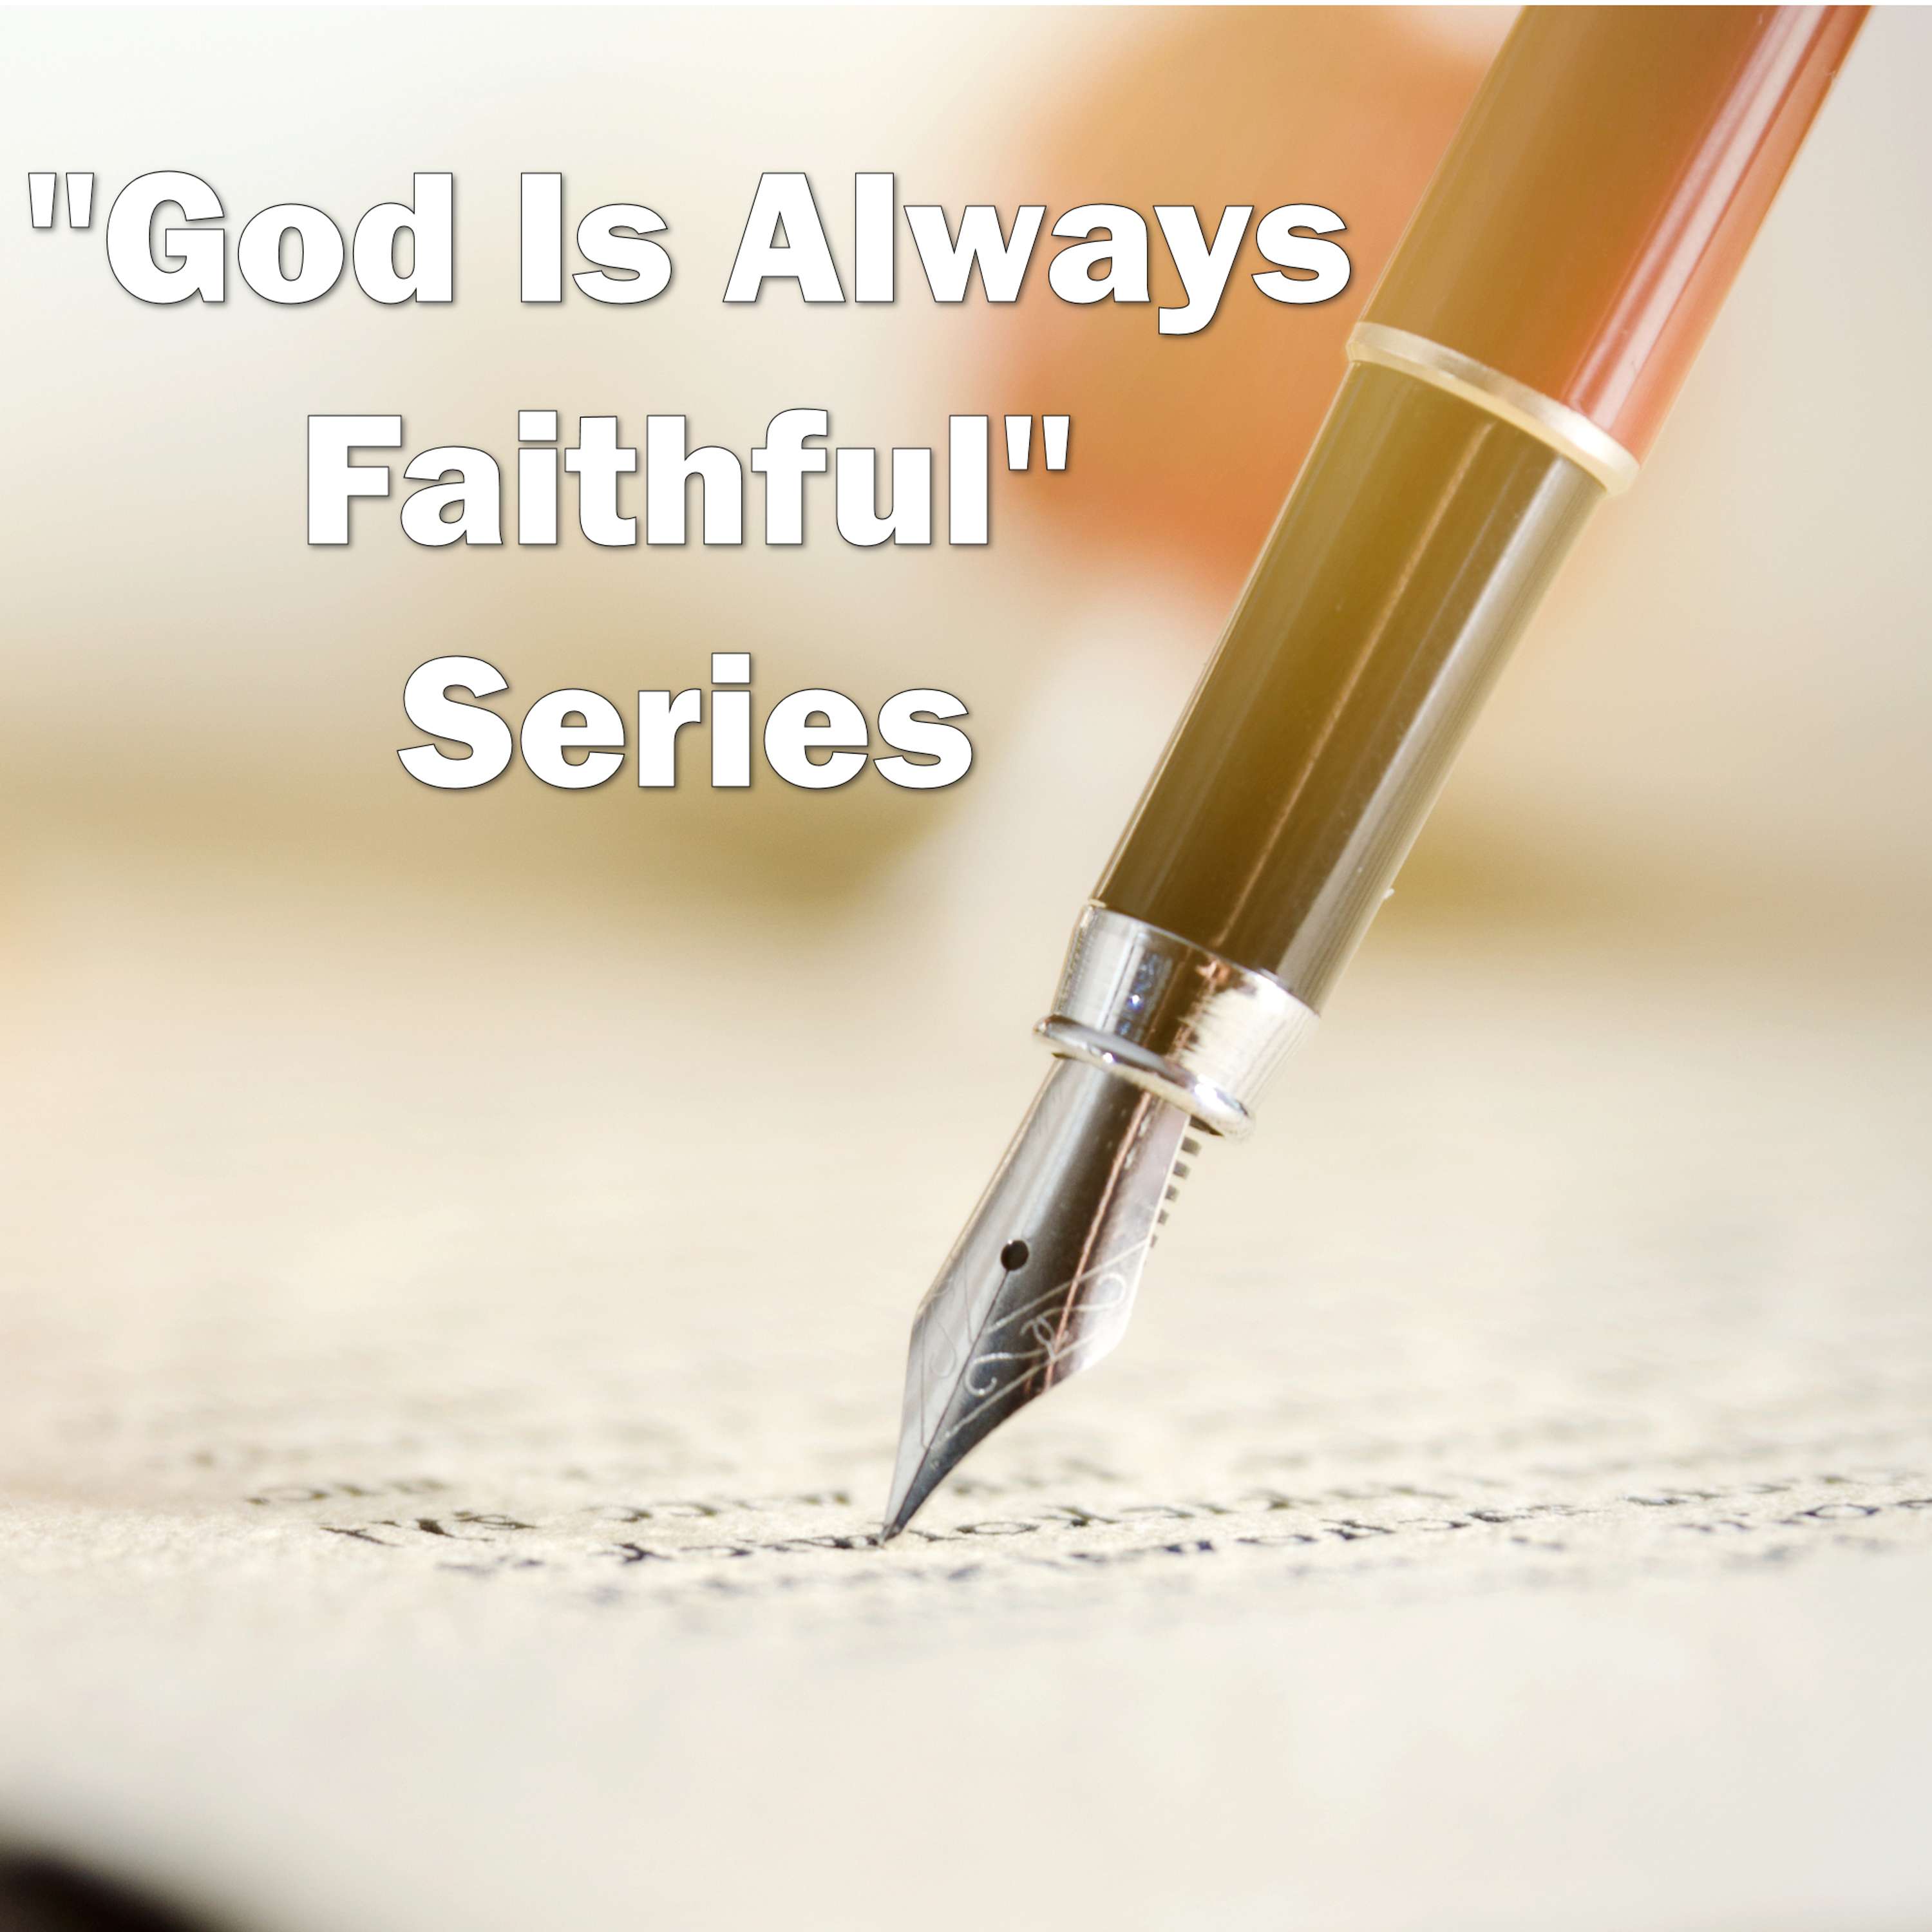 Session 3 - Jesus Is Always Always (God Is Always Faithful Series)